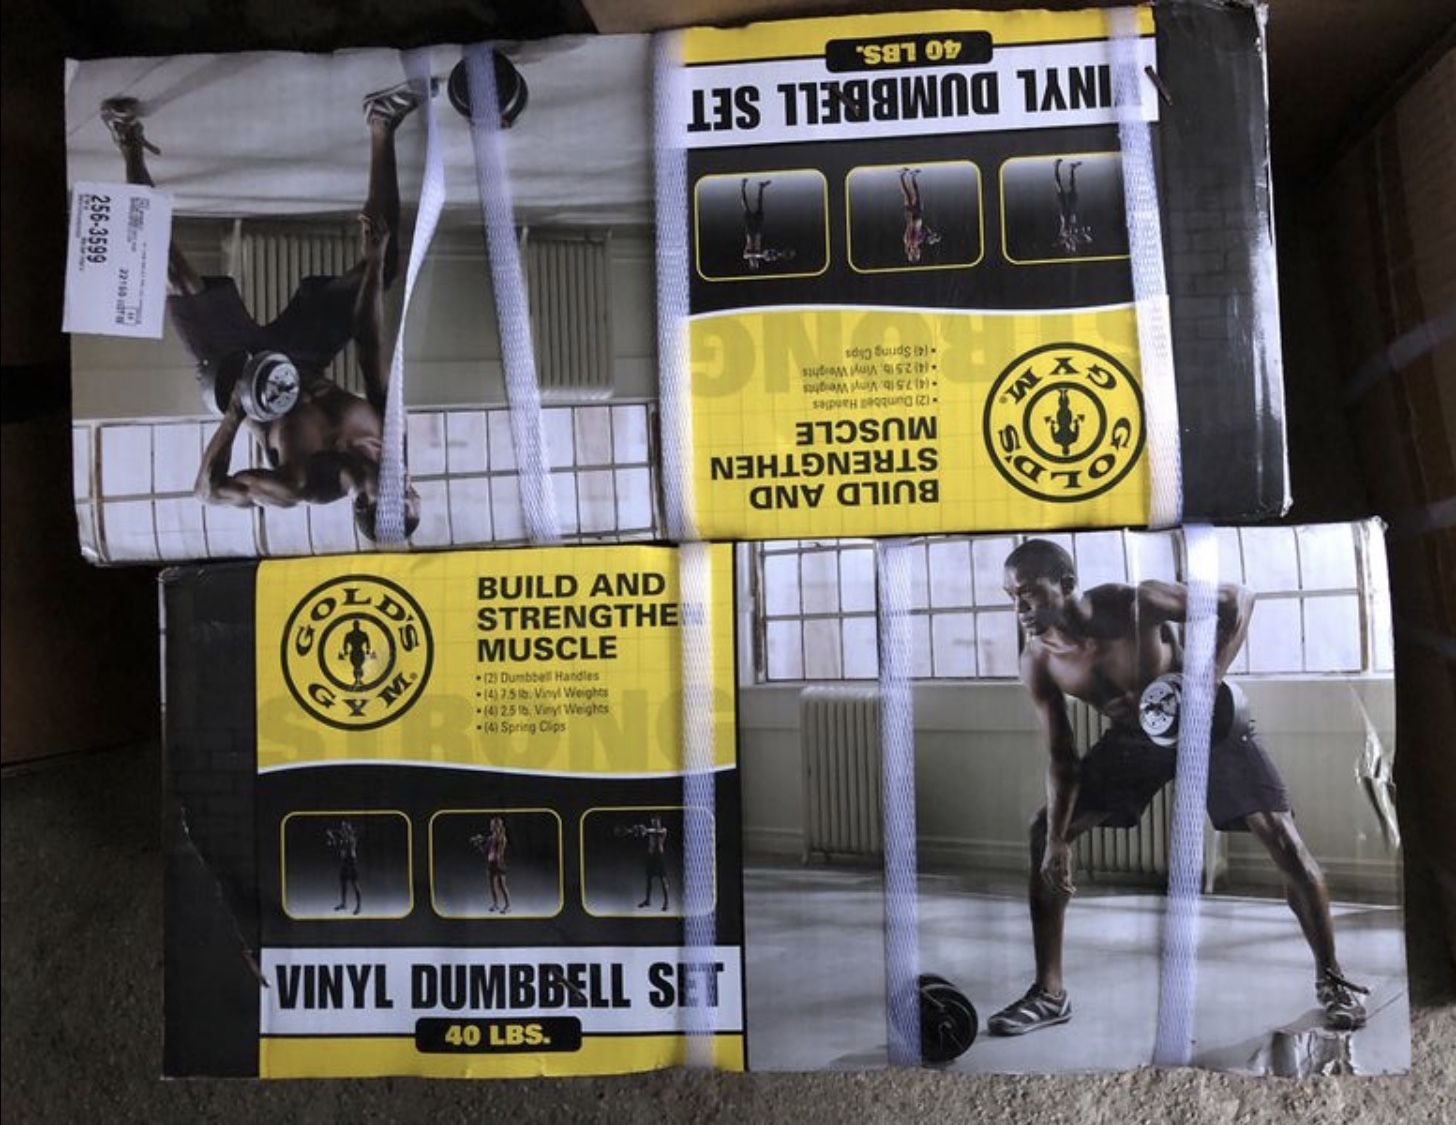 NEW Gold's Gym Vinyl Dumbbell Set, 40 lbs